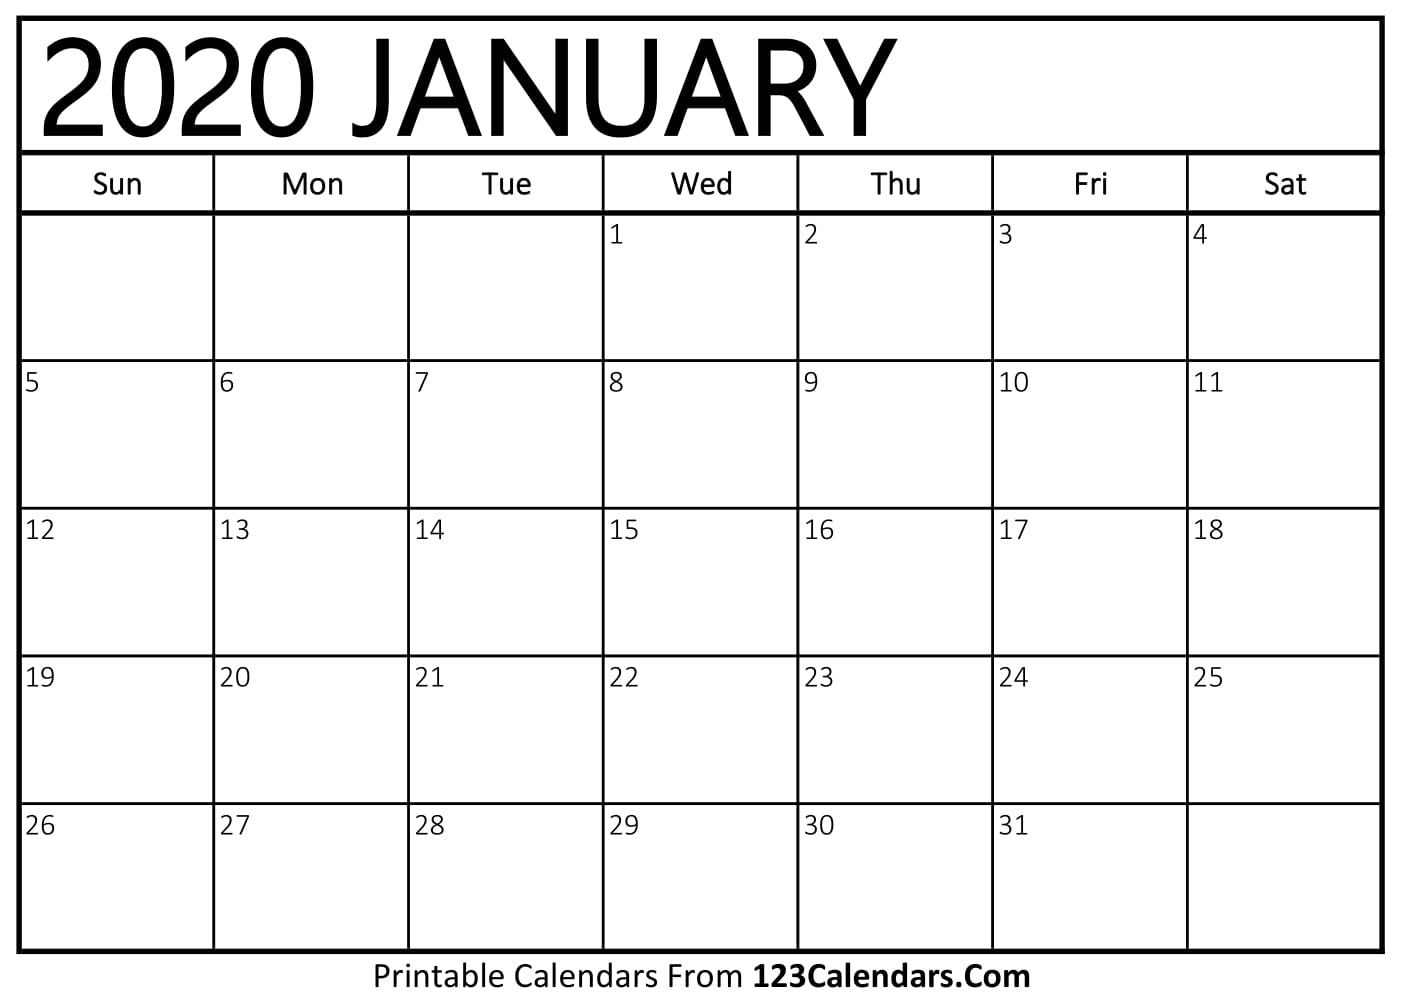 Free Printable Calendar | 123Calendars throughout 2020 Free Printable Calendars With Lines Without Downloading